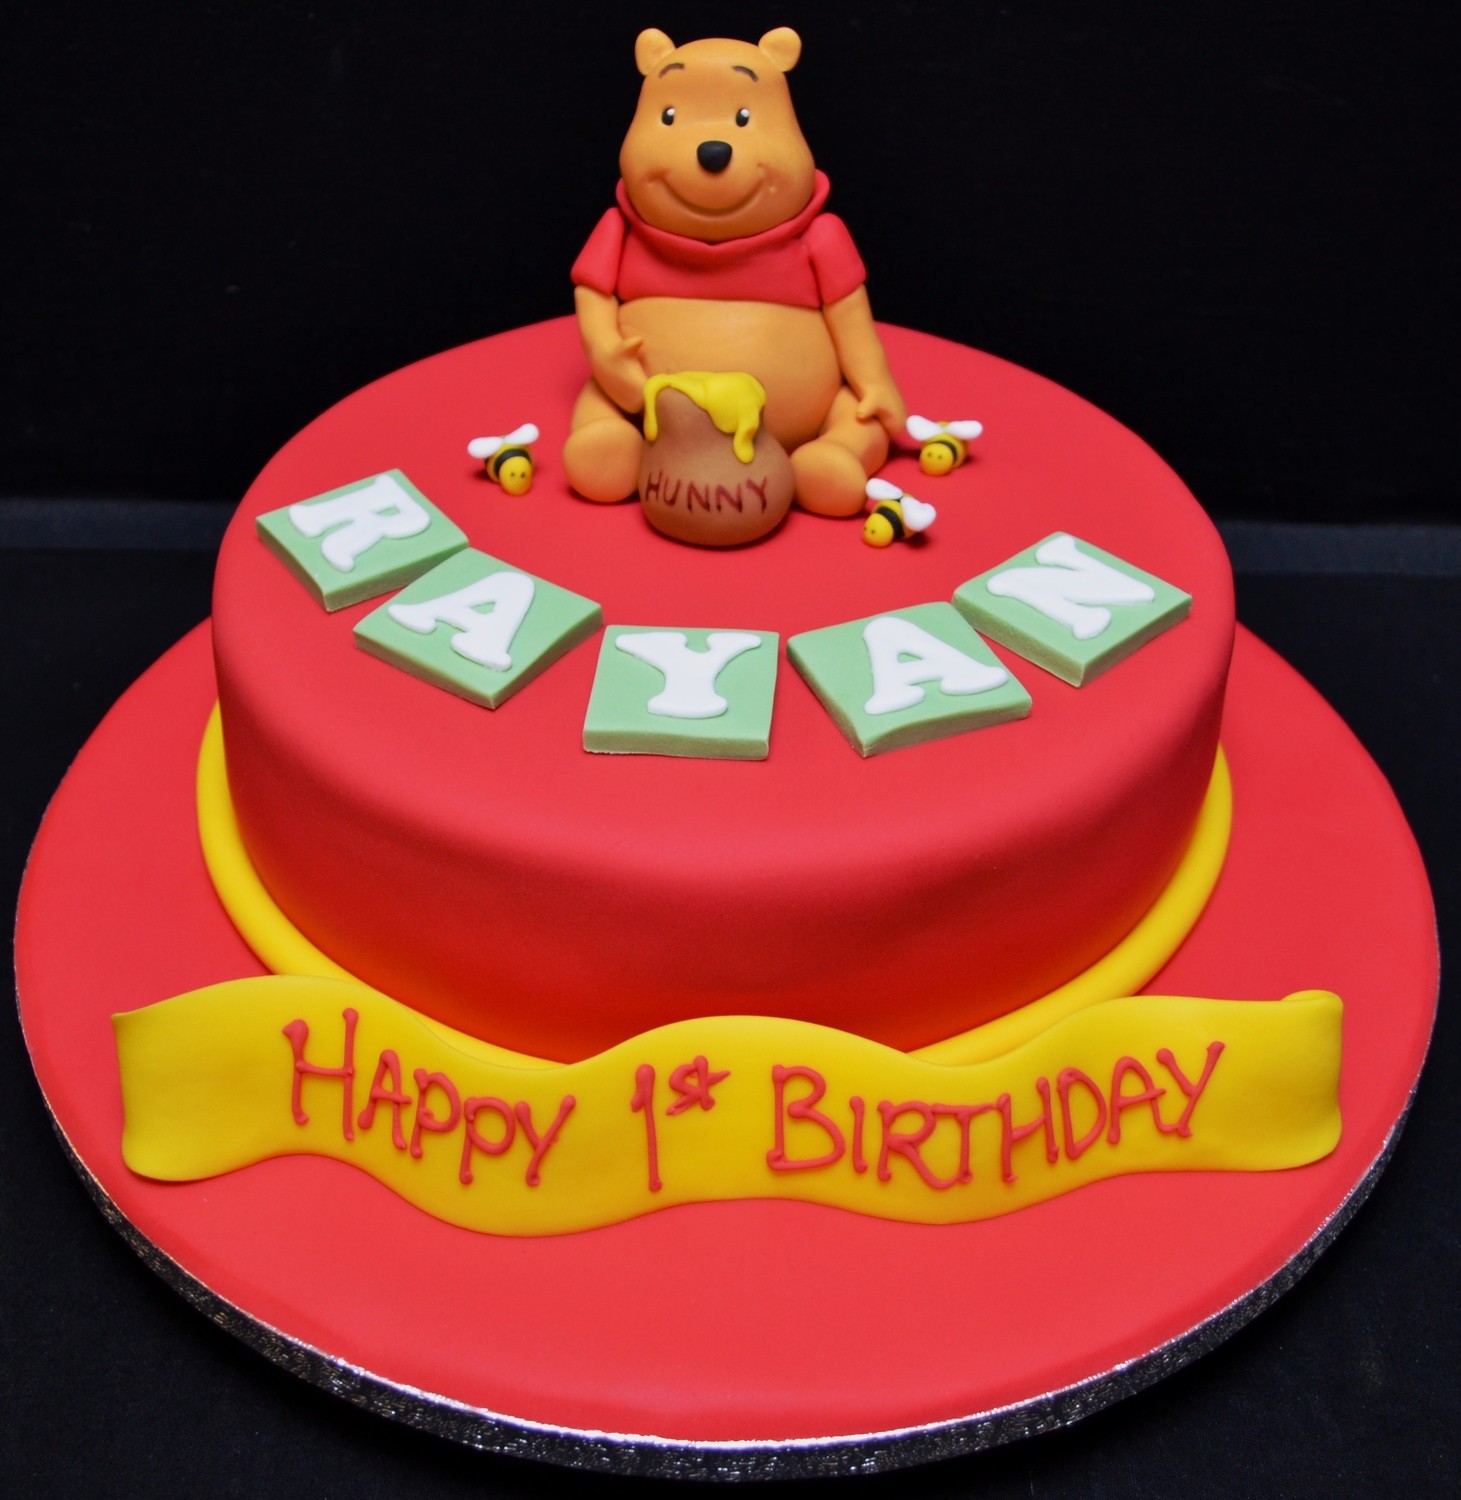 Winnie The Pooh on round cake